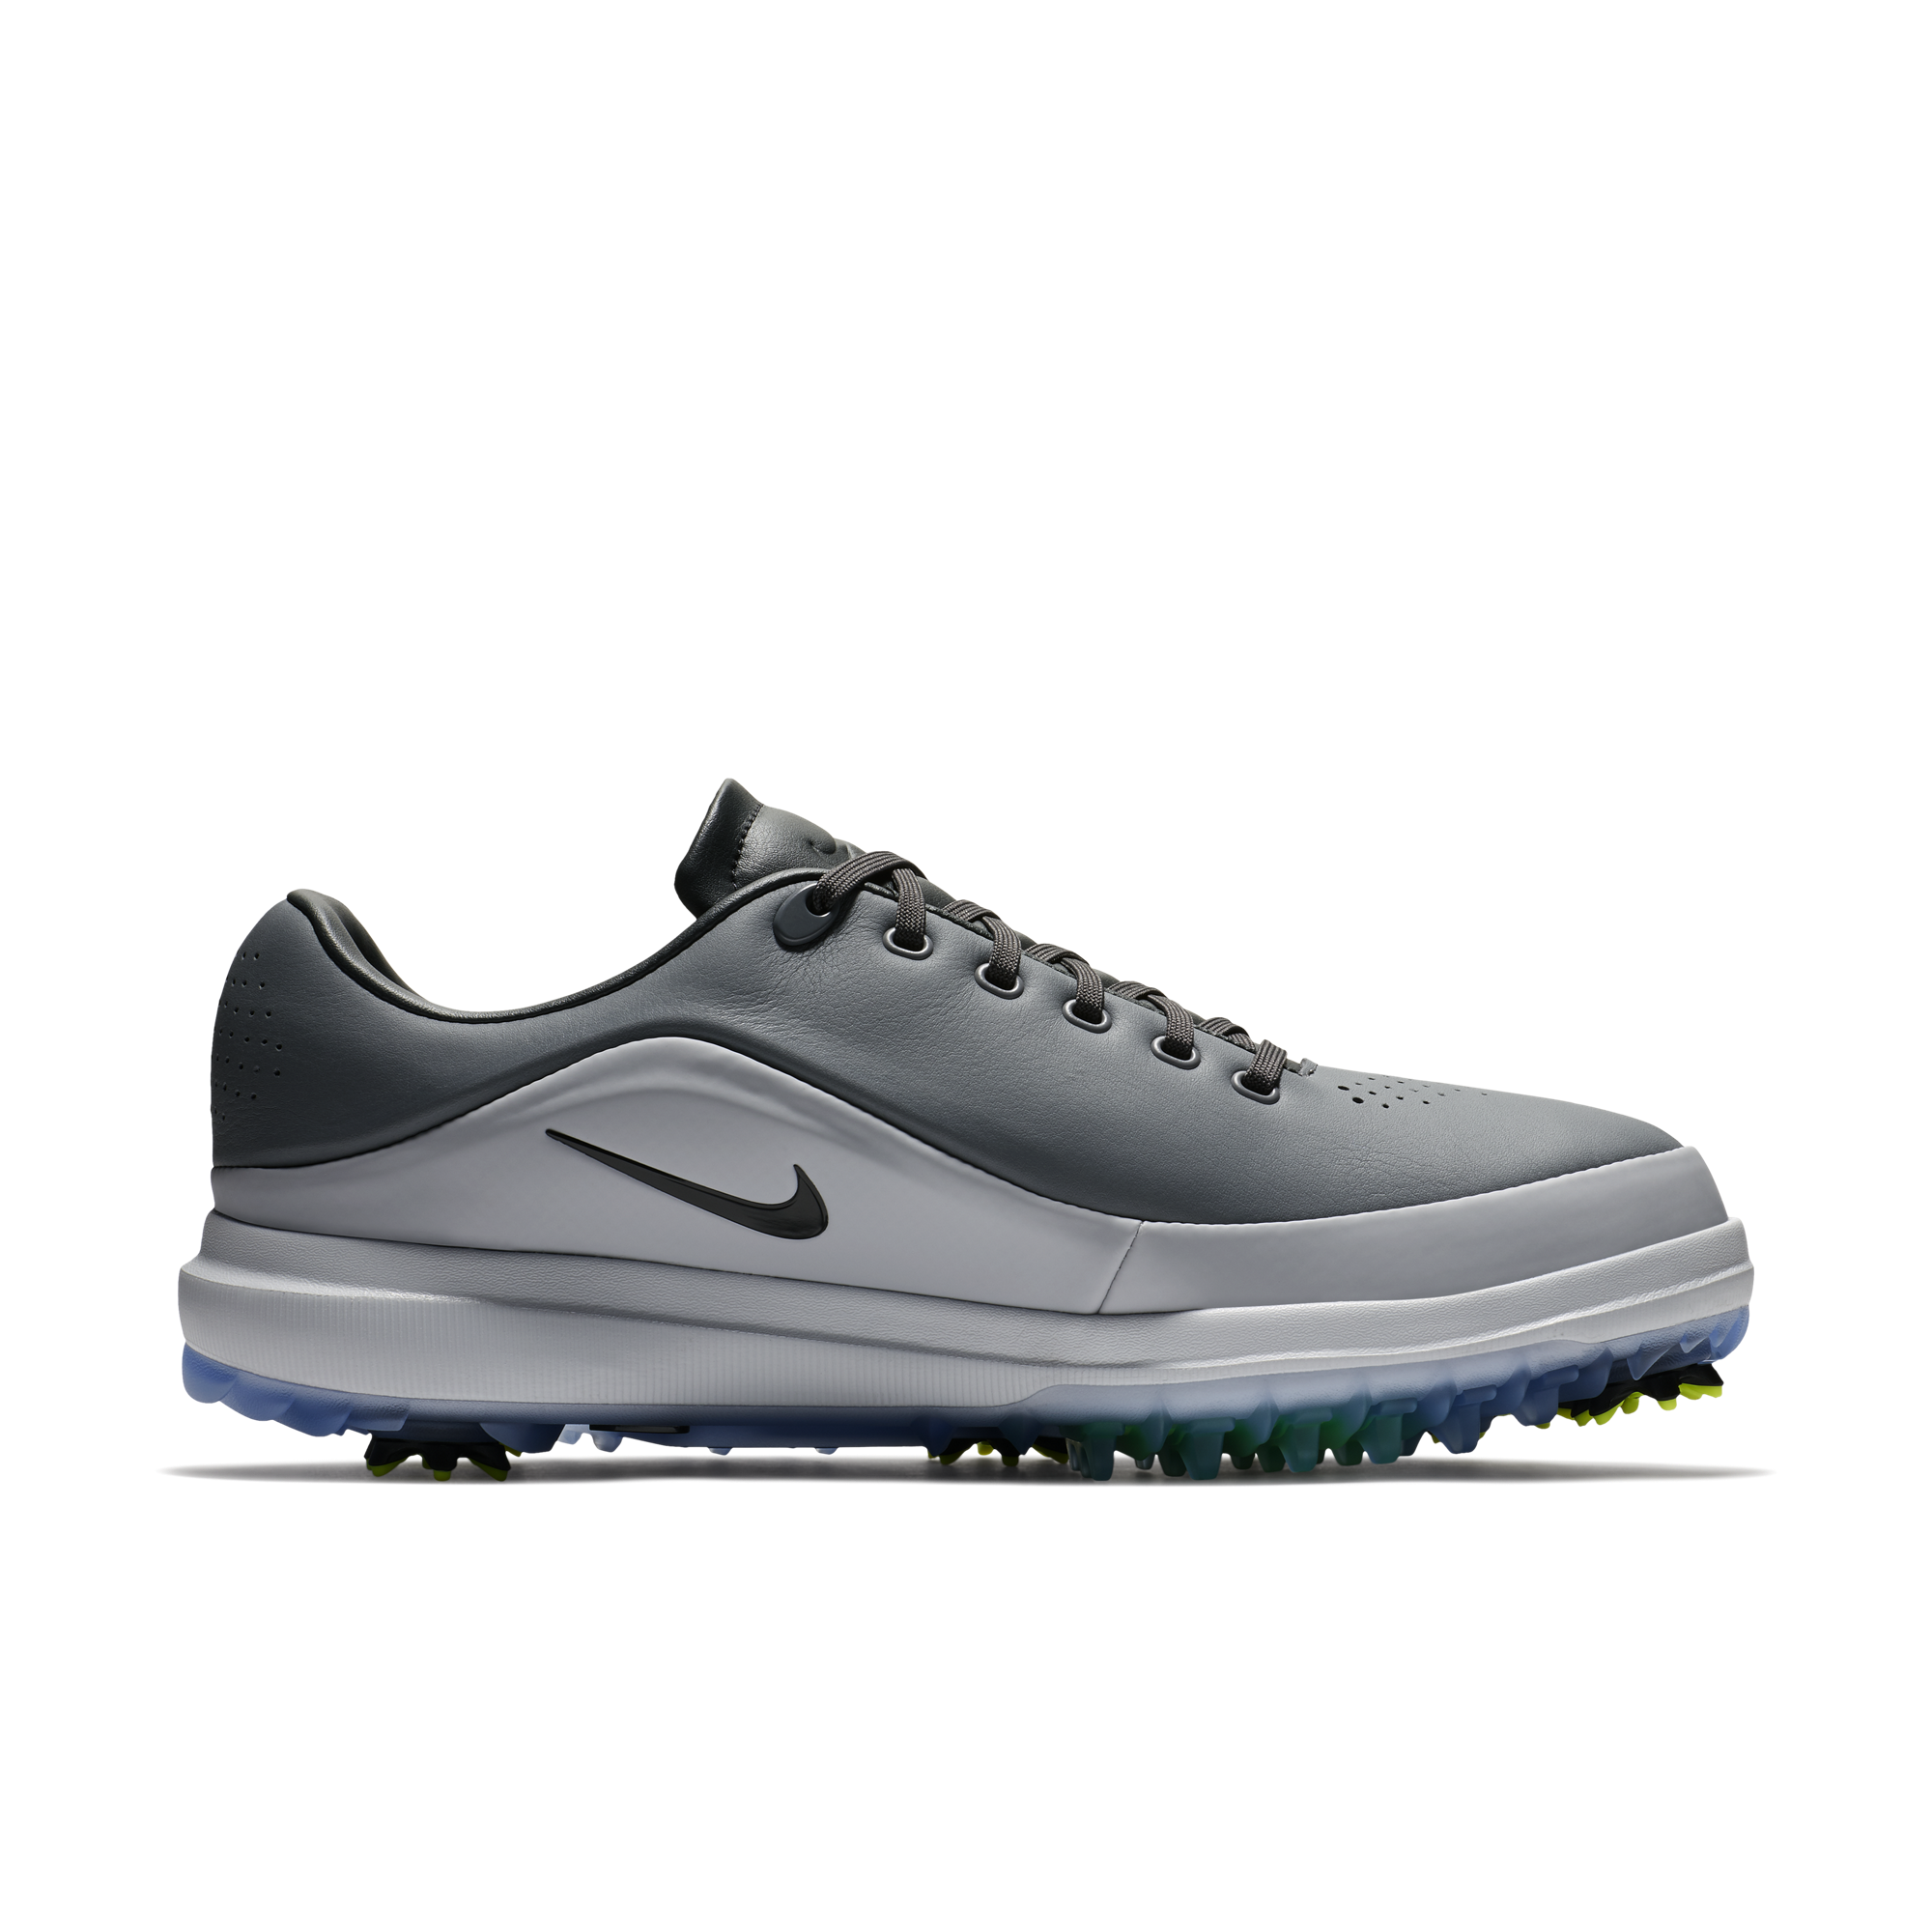 Nike Air Zoom Precision Men's Golf Shoe - Grey/Black